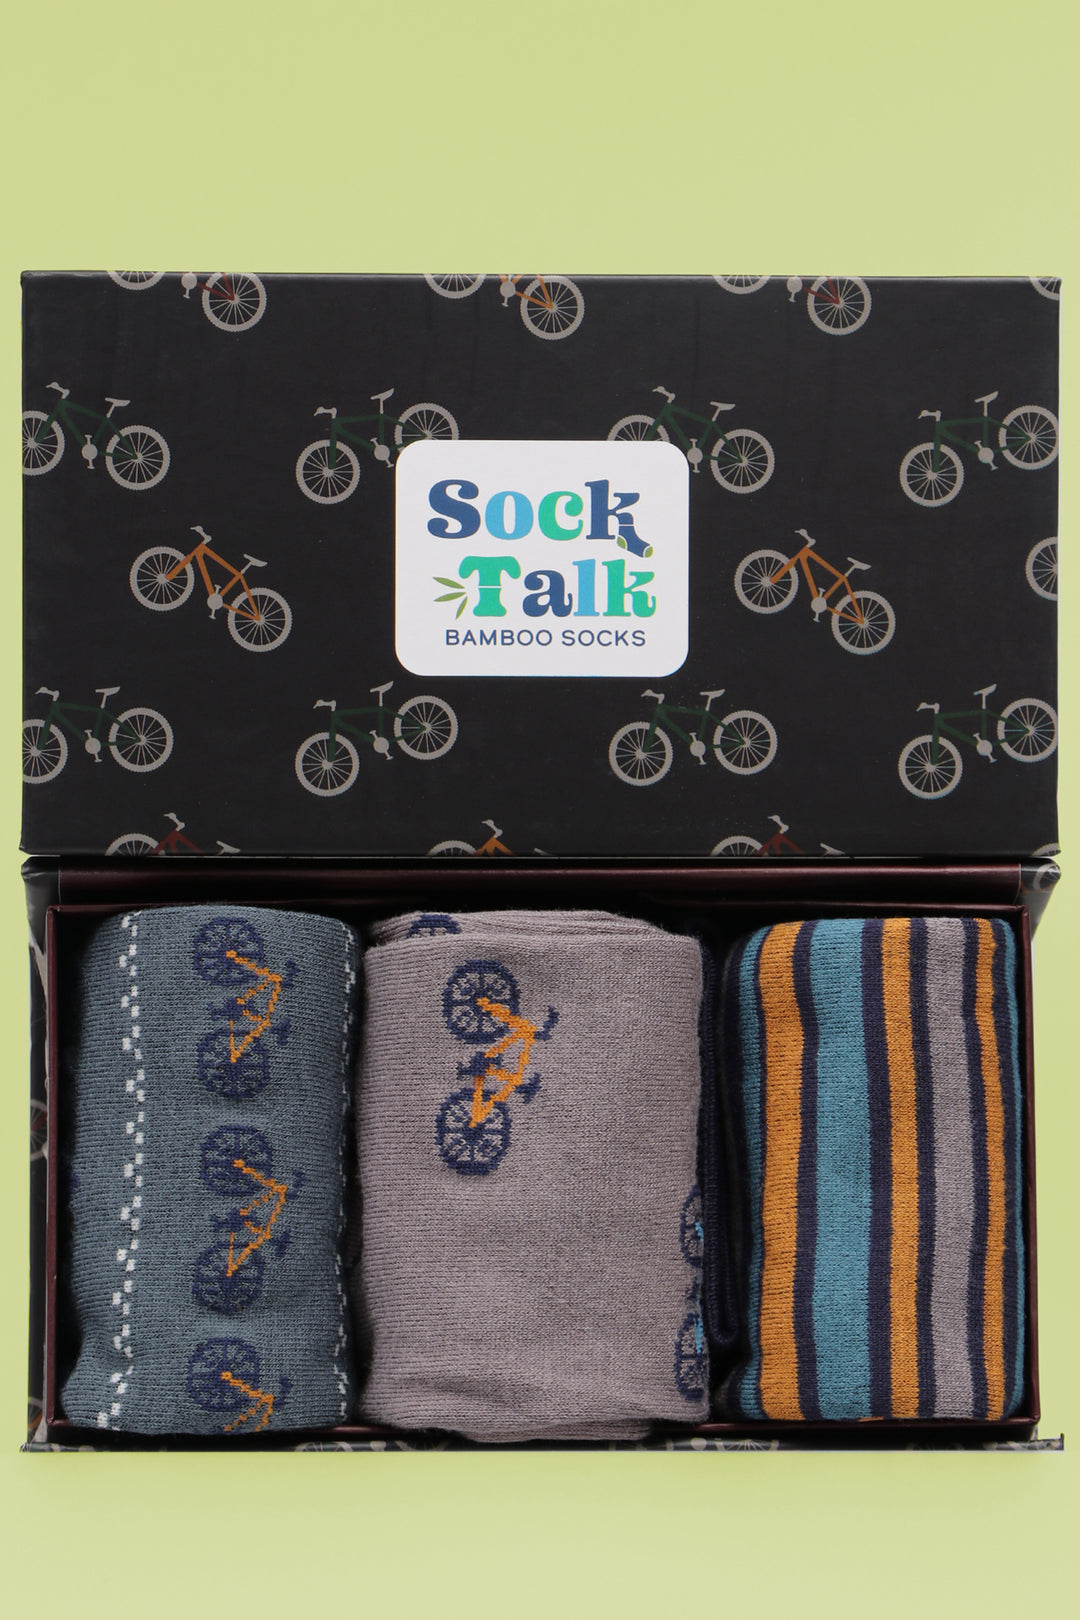 Teal Men's Mountain Biking Giftbox